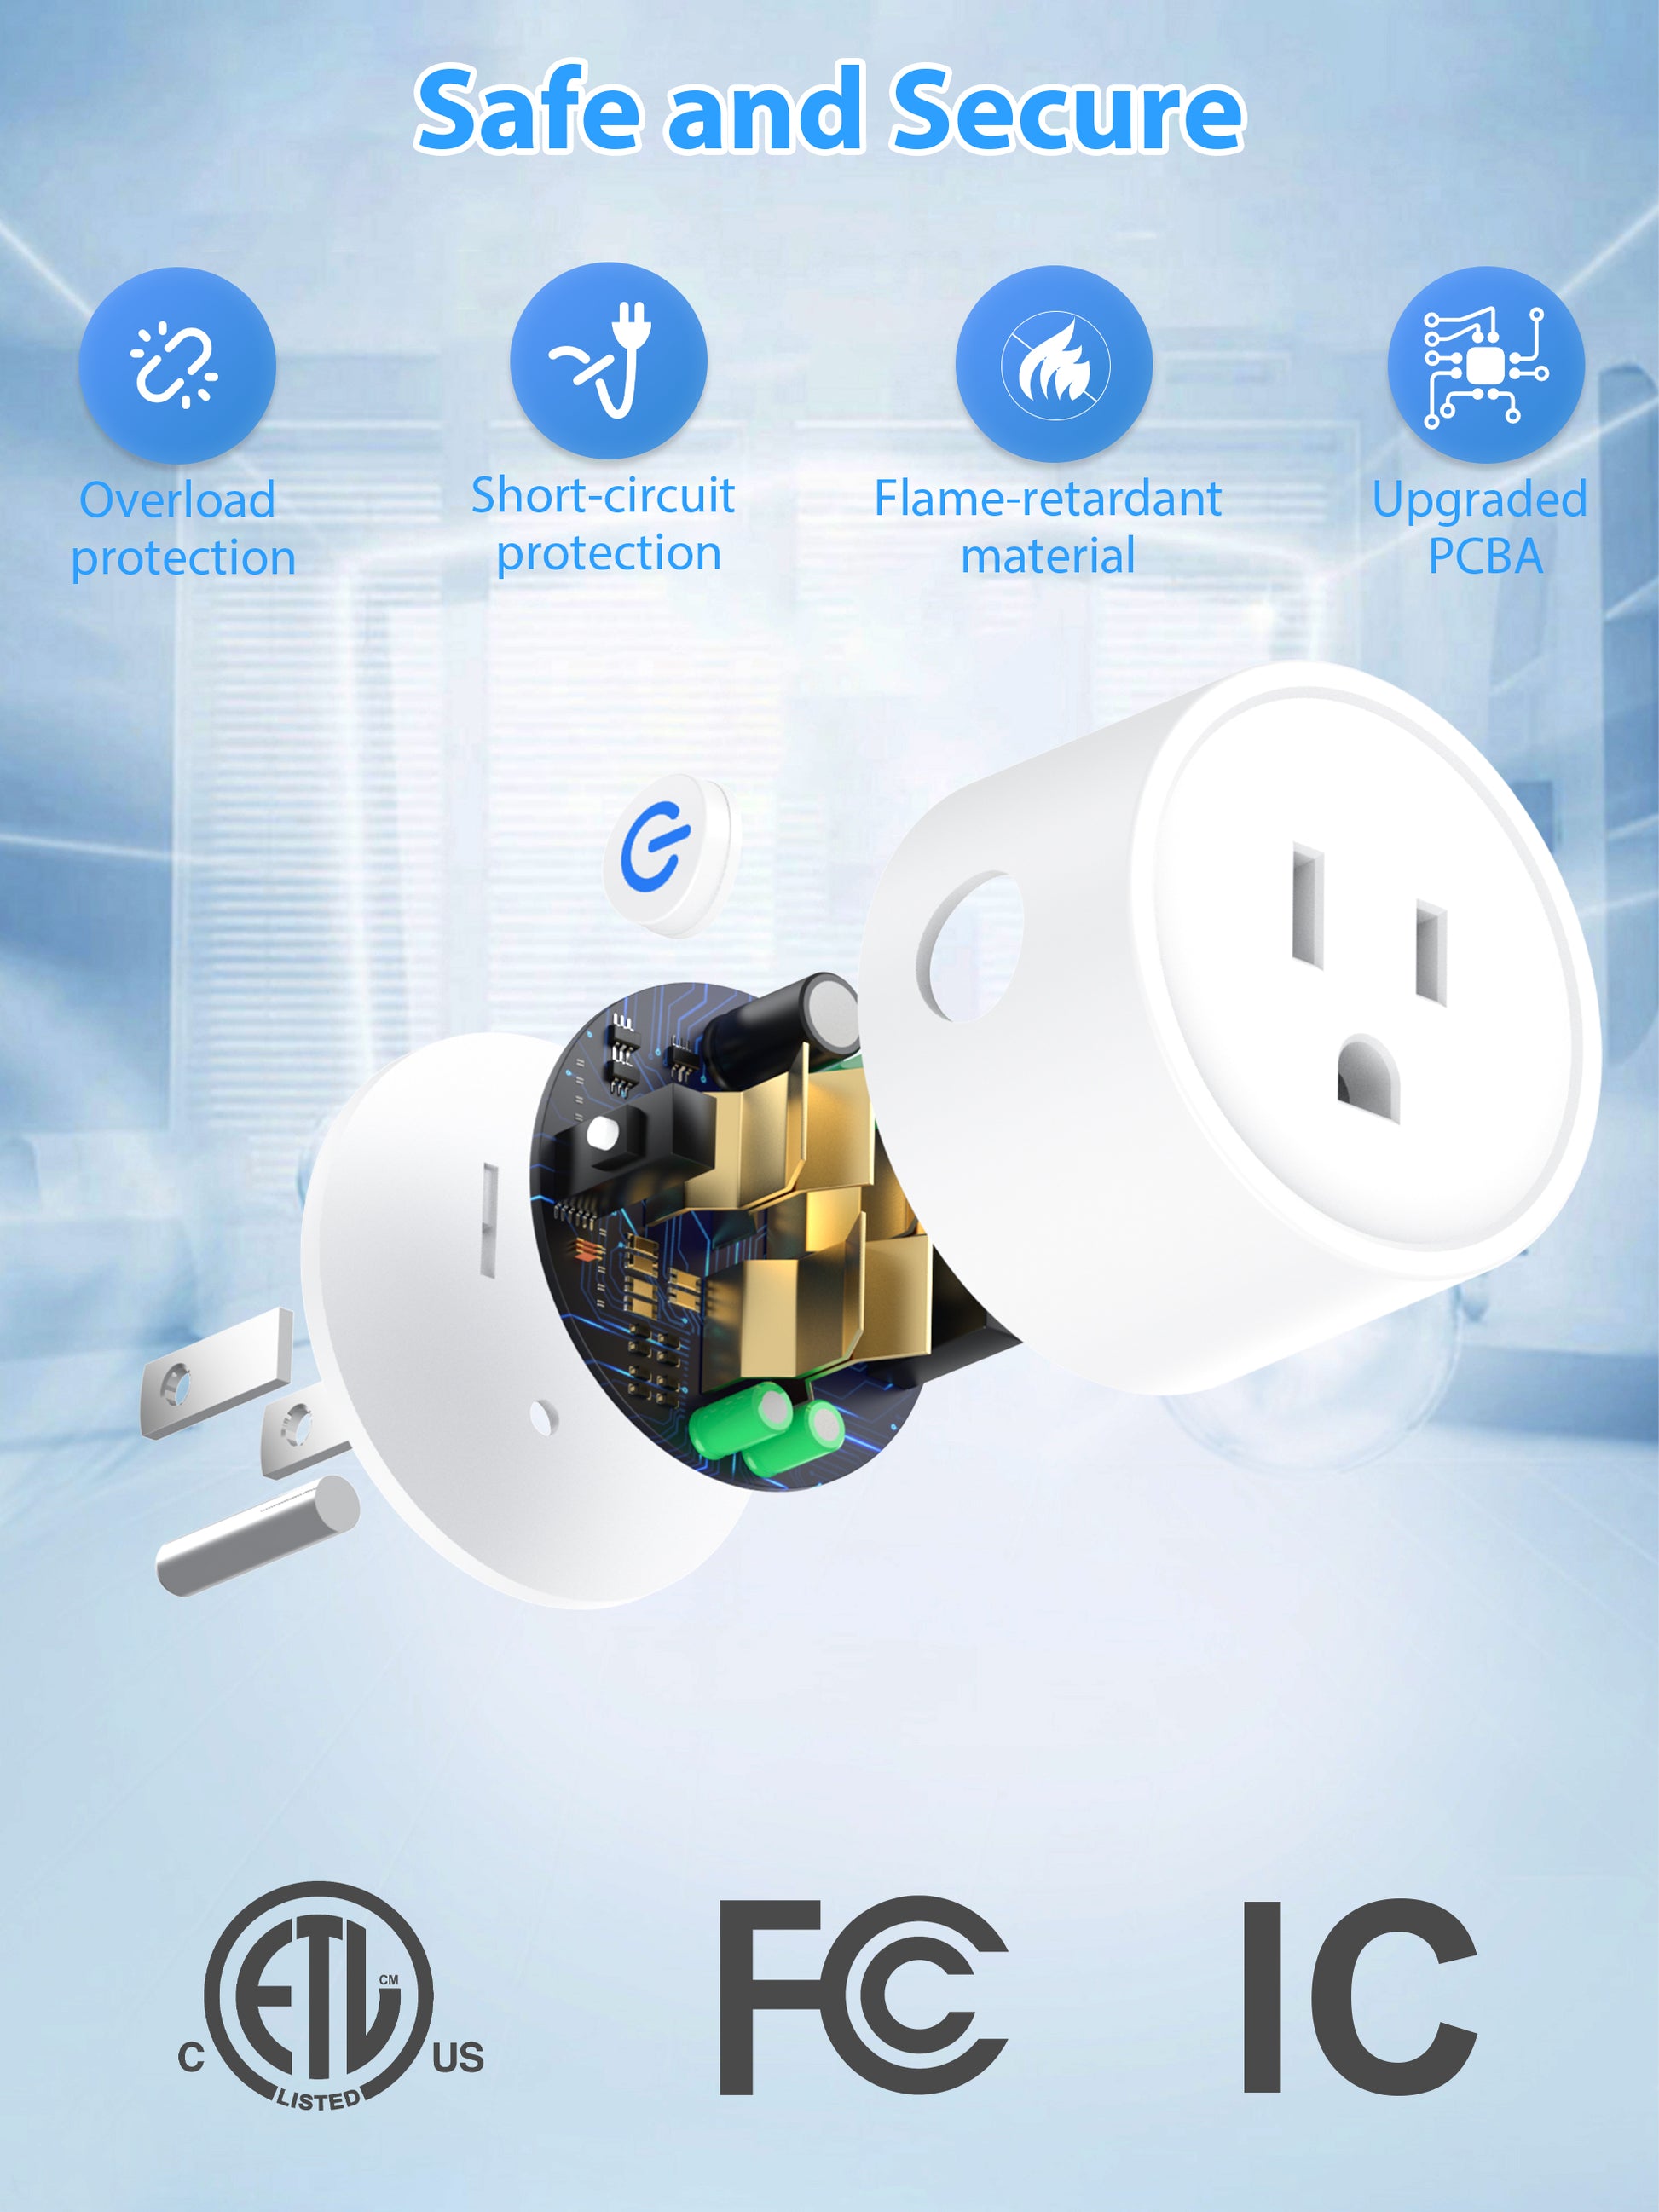 Smart Life APP Wifi Smart Power Socket EU/US Plug Timer Switch